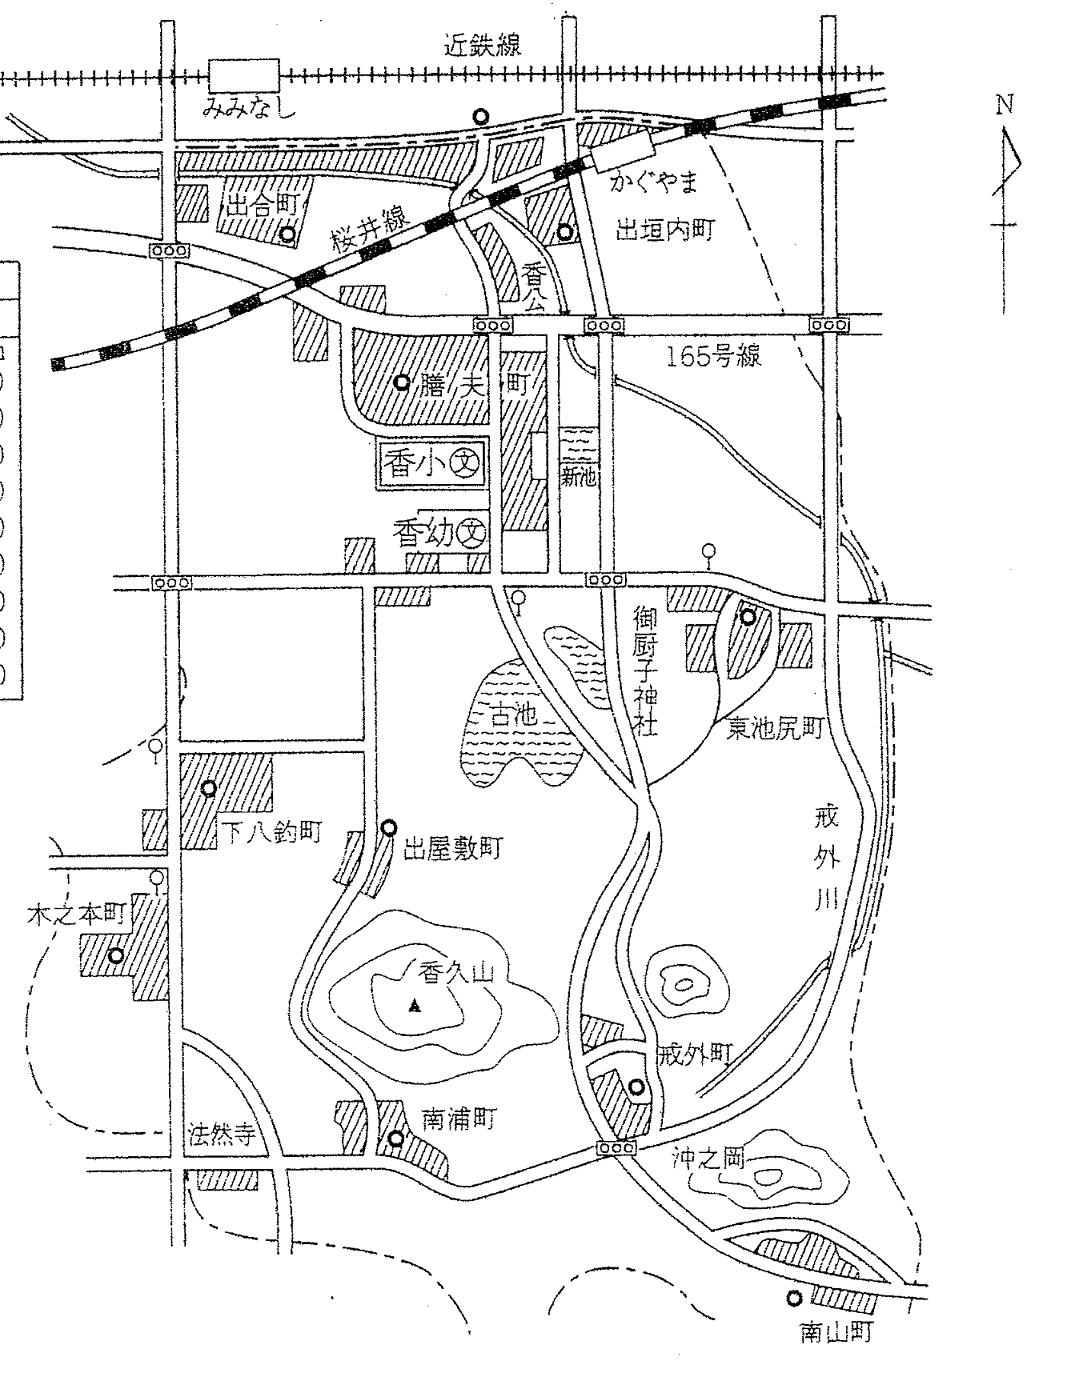 香久山小学校周辺の校区案内の白黒の地図